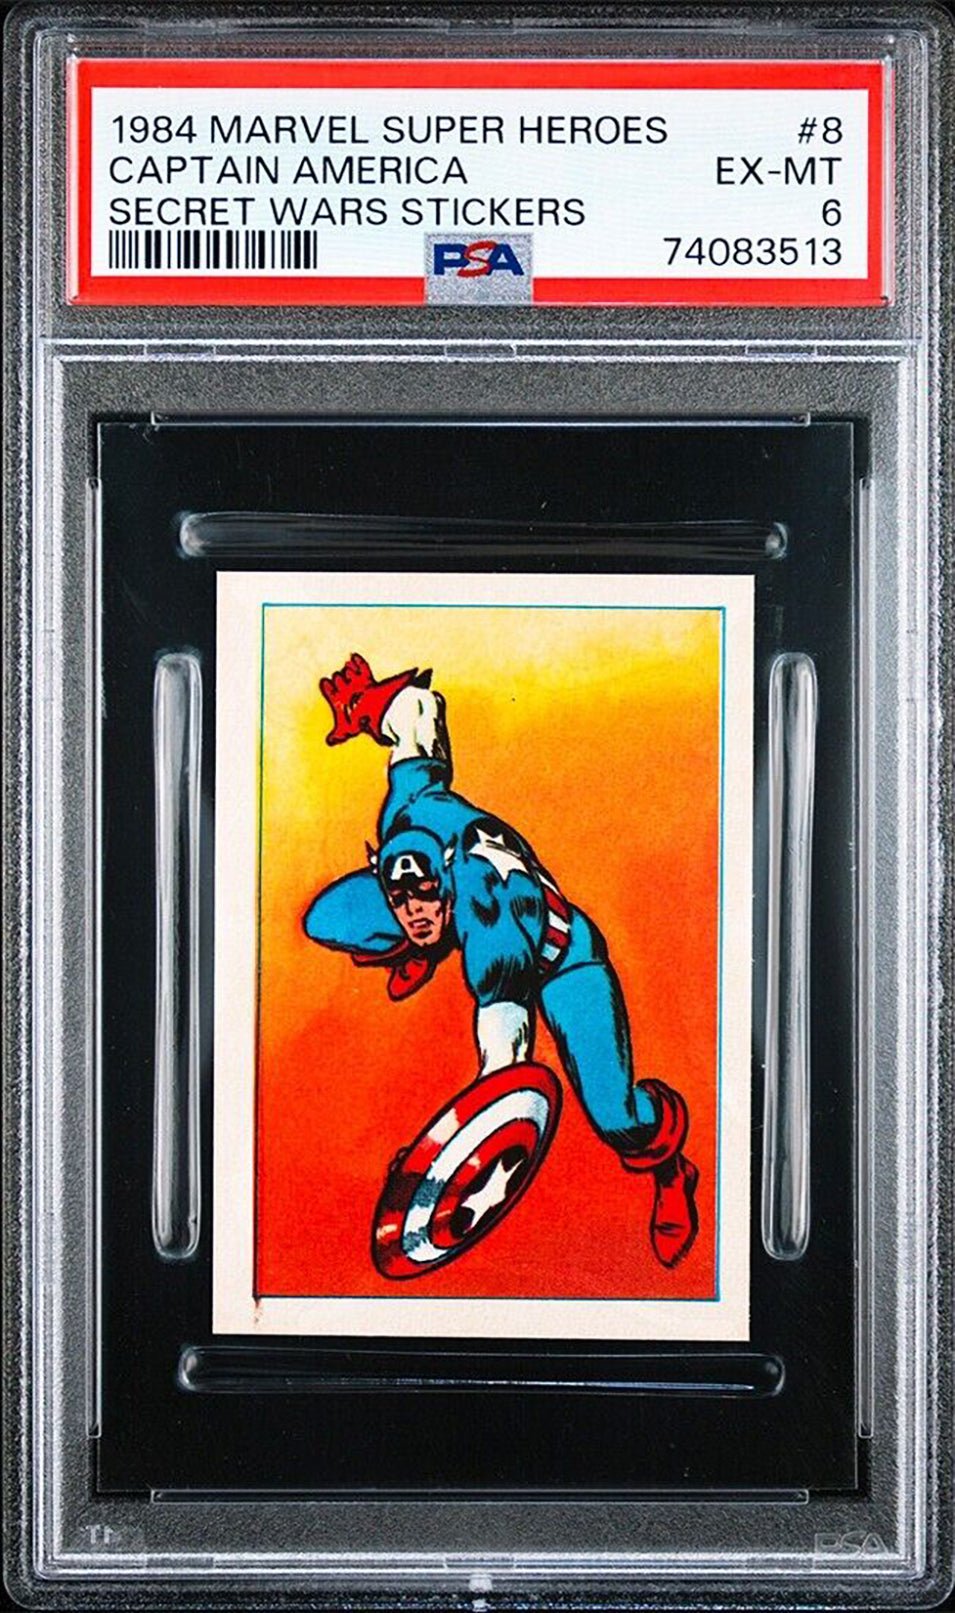 CAPTAIN AMERICA PSA 6 1984 Marvel Super Heroes Secret Wars Sticker #8 Marvel Graded Cards Sticker - Hobby Gems